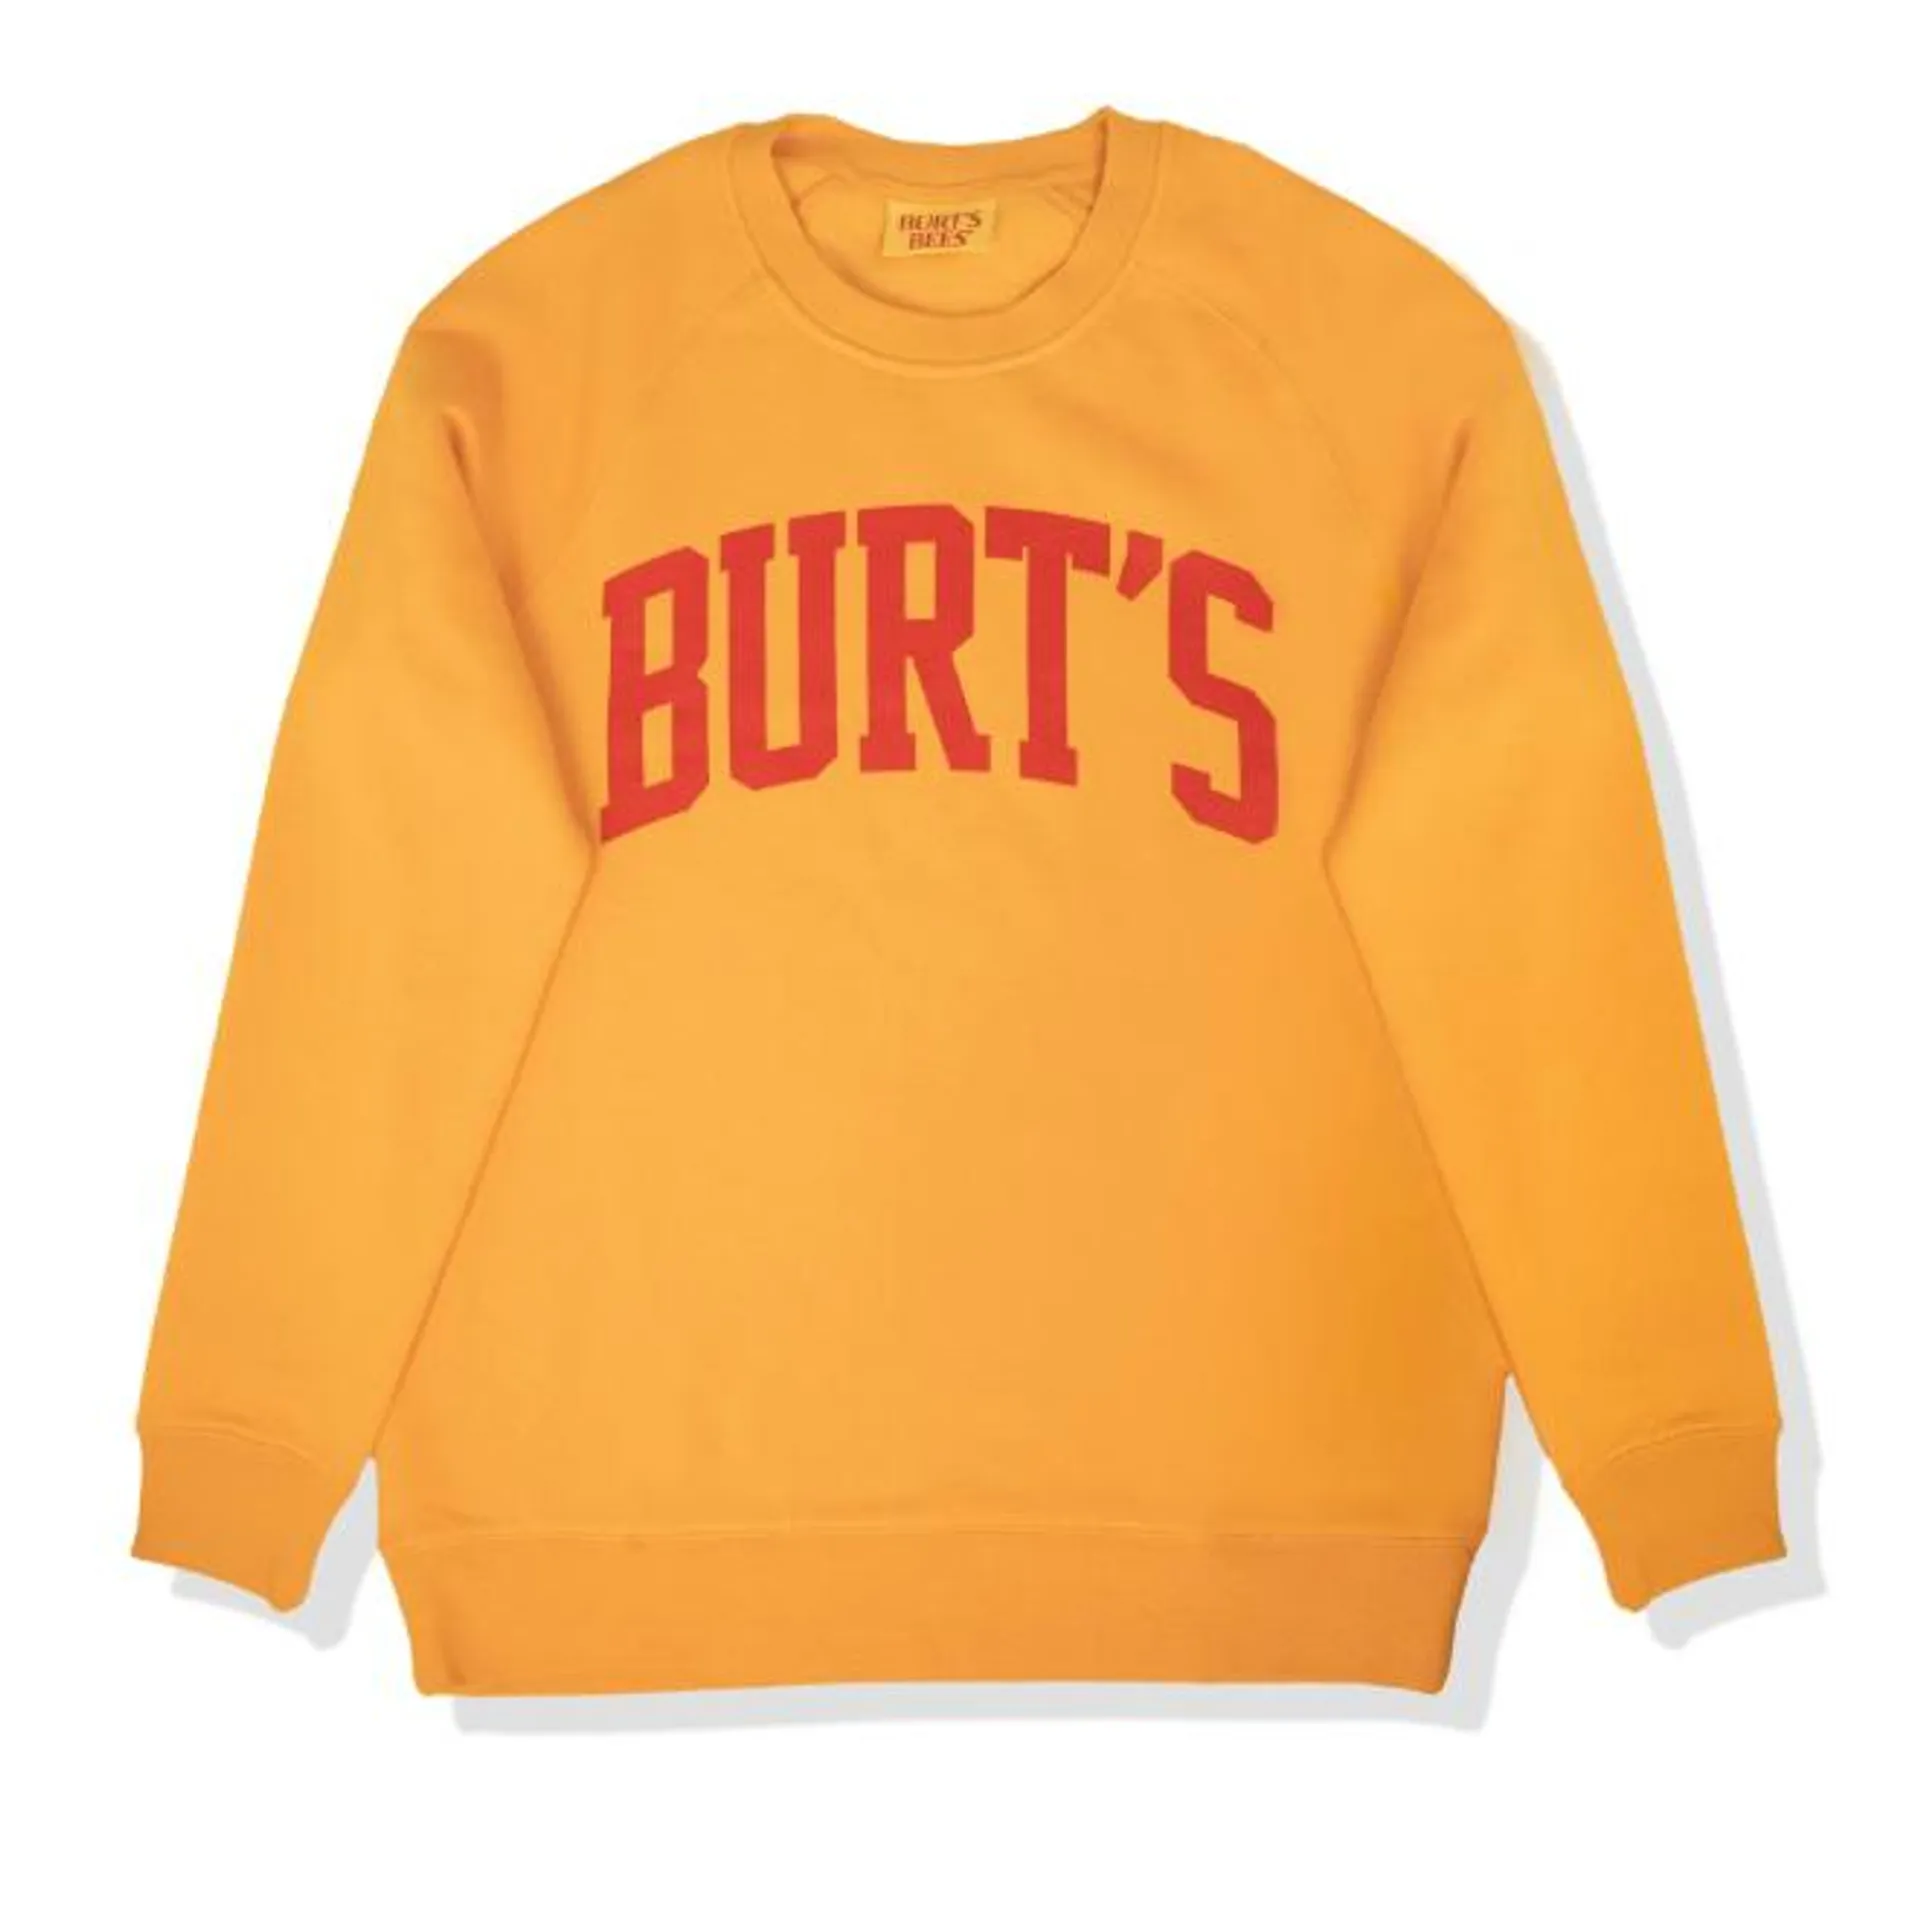 Burt's Crewneck Sweatshirt